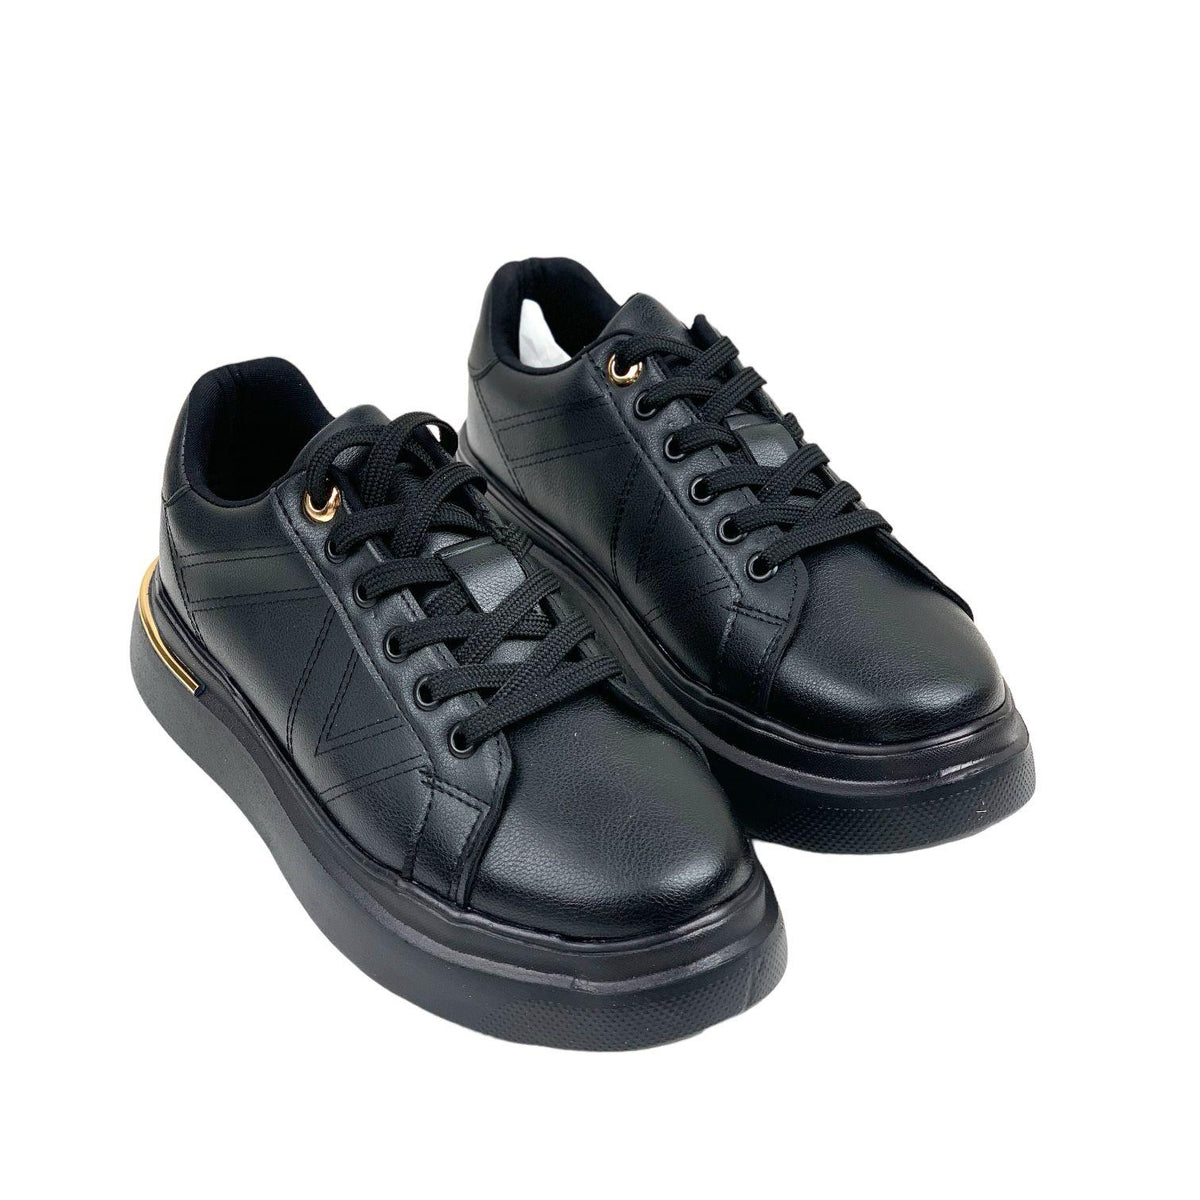 Women's Eryl BlackGold Laced Casual Sports Shoes Sneaker 3 Cm